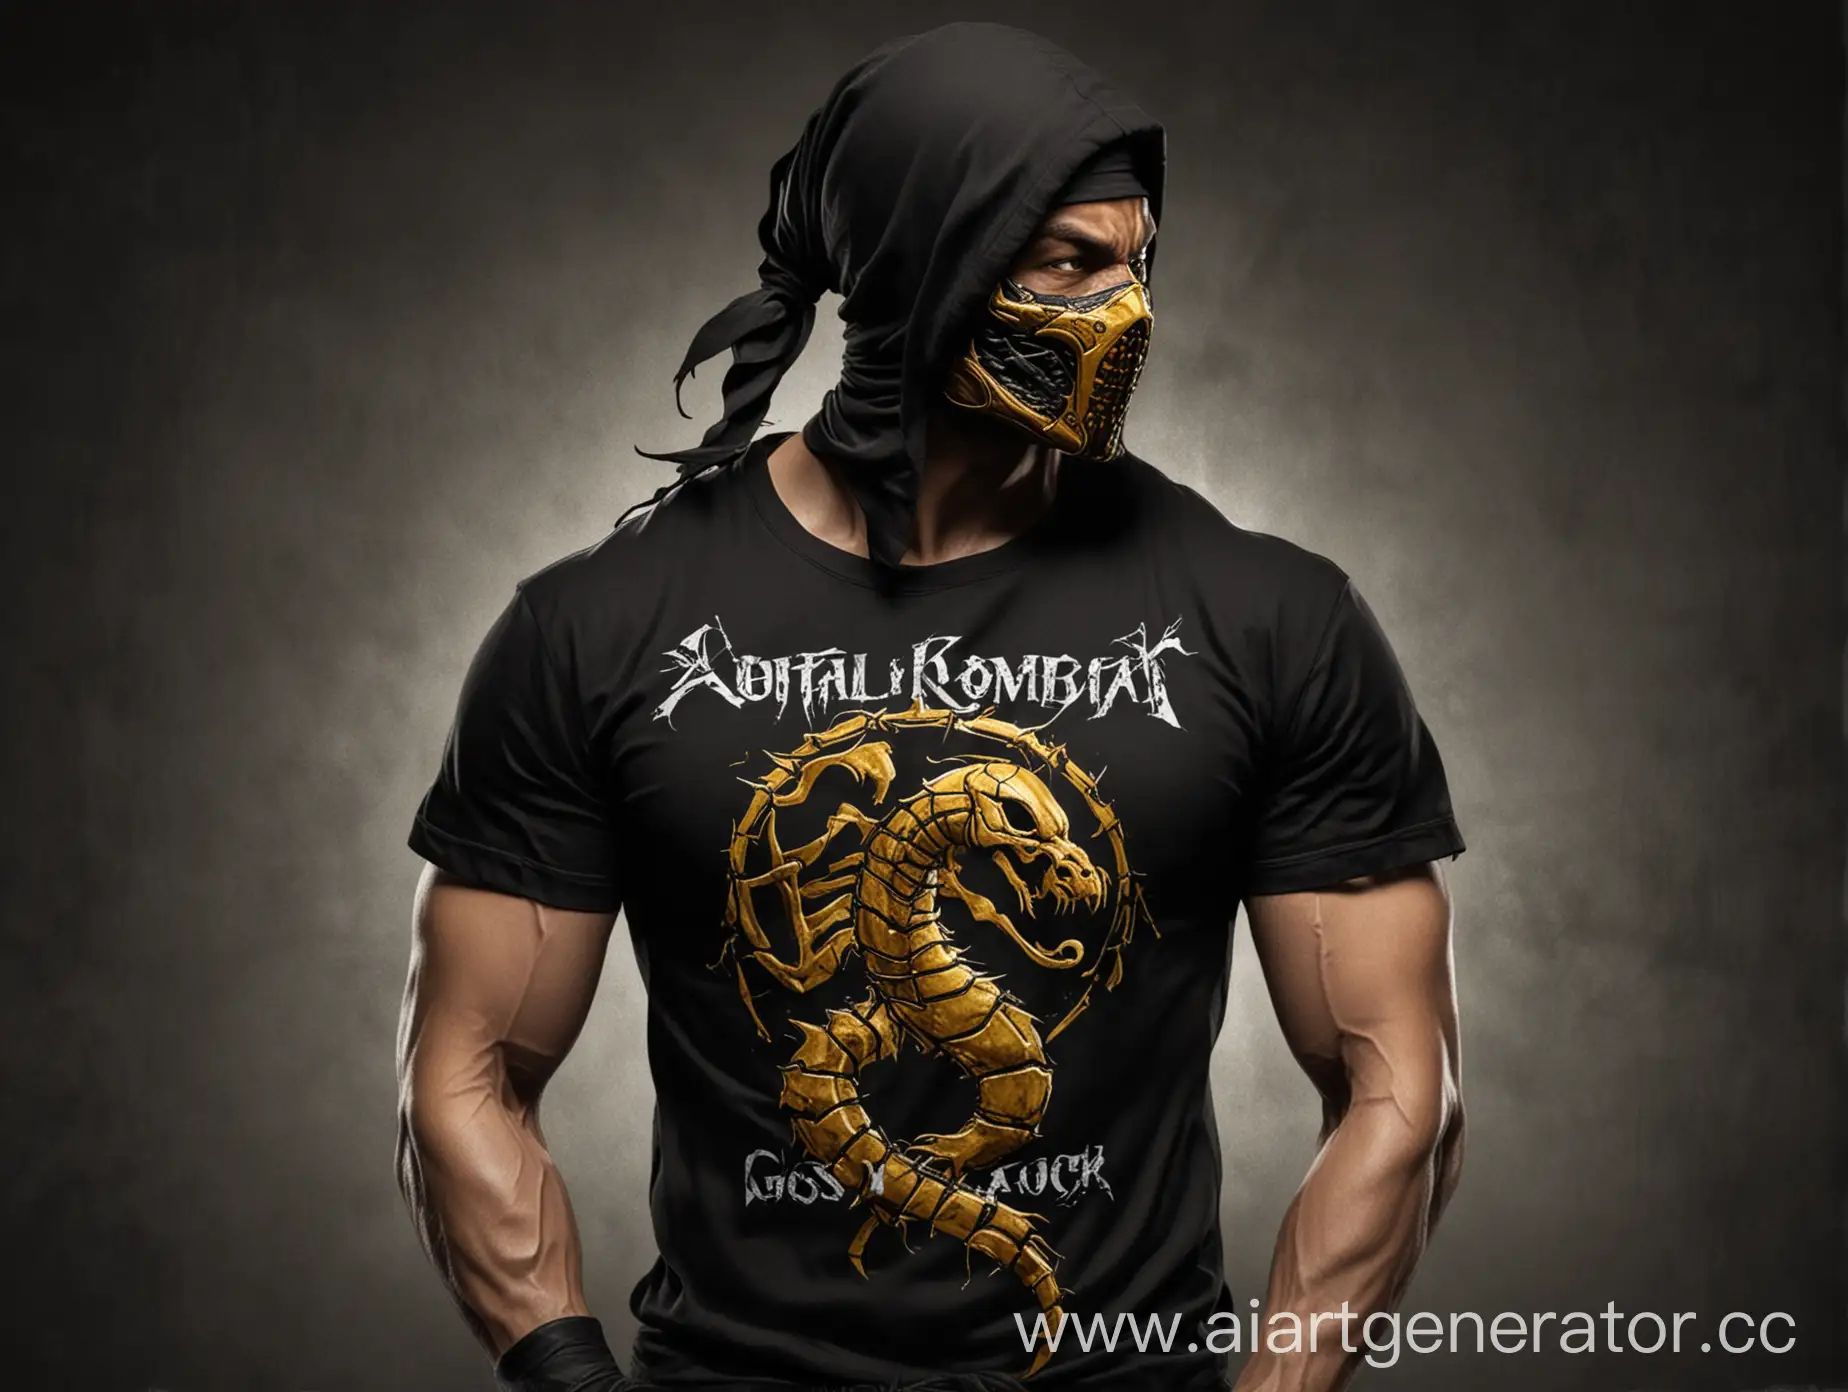 Scorpion-from-Mortal-Kombat-in-Black-TShirt-with-Gosxach-Print